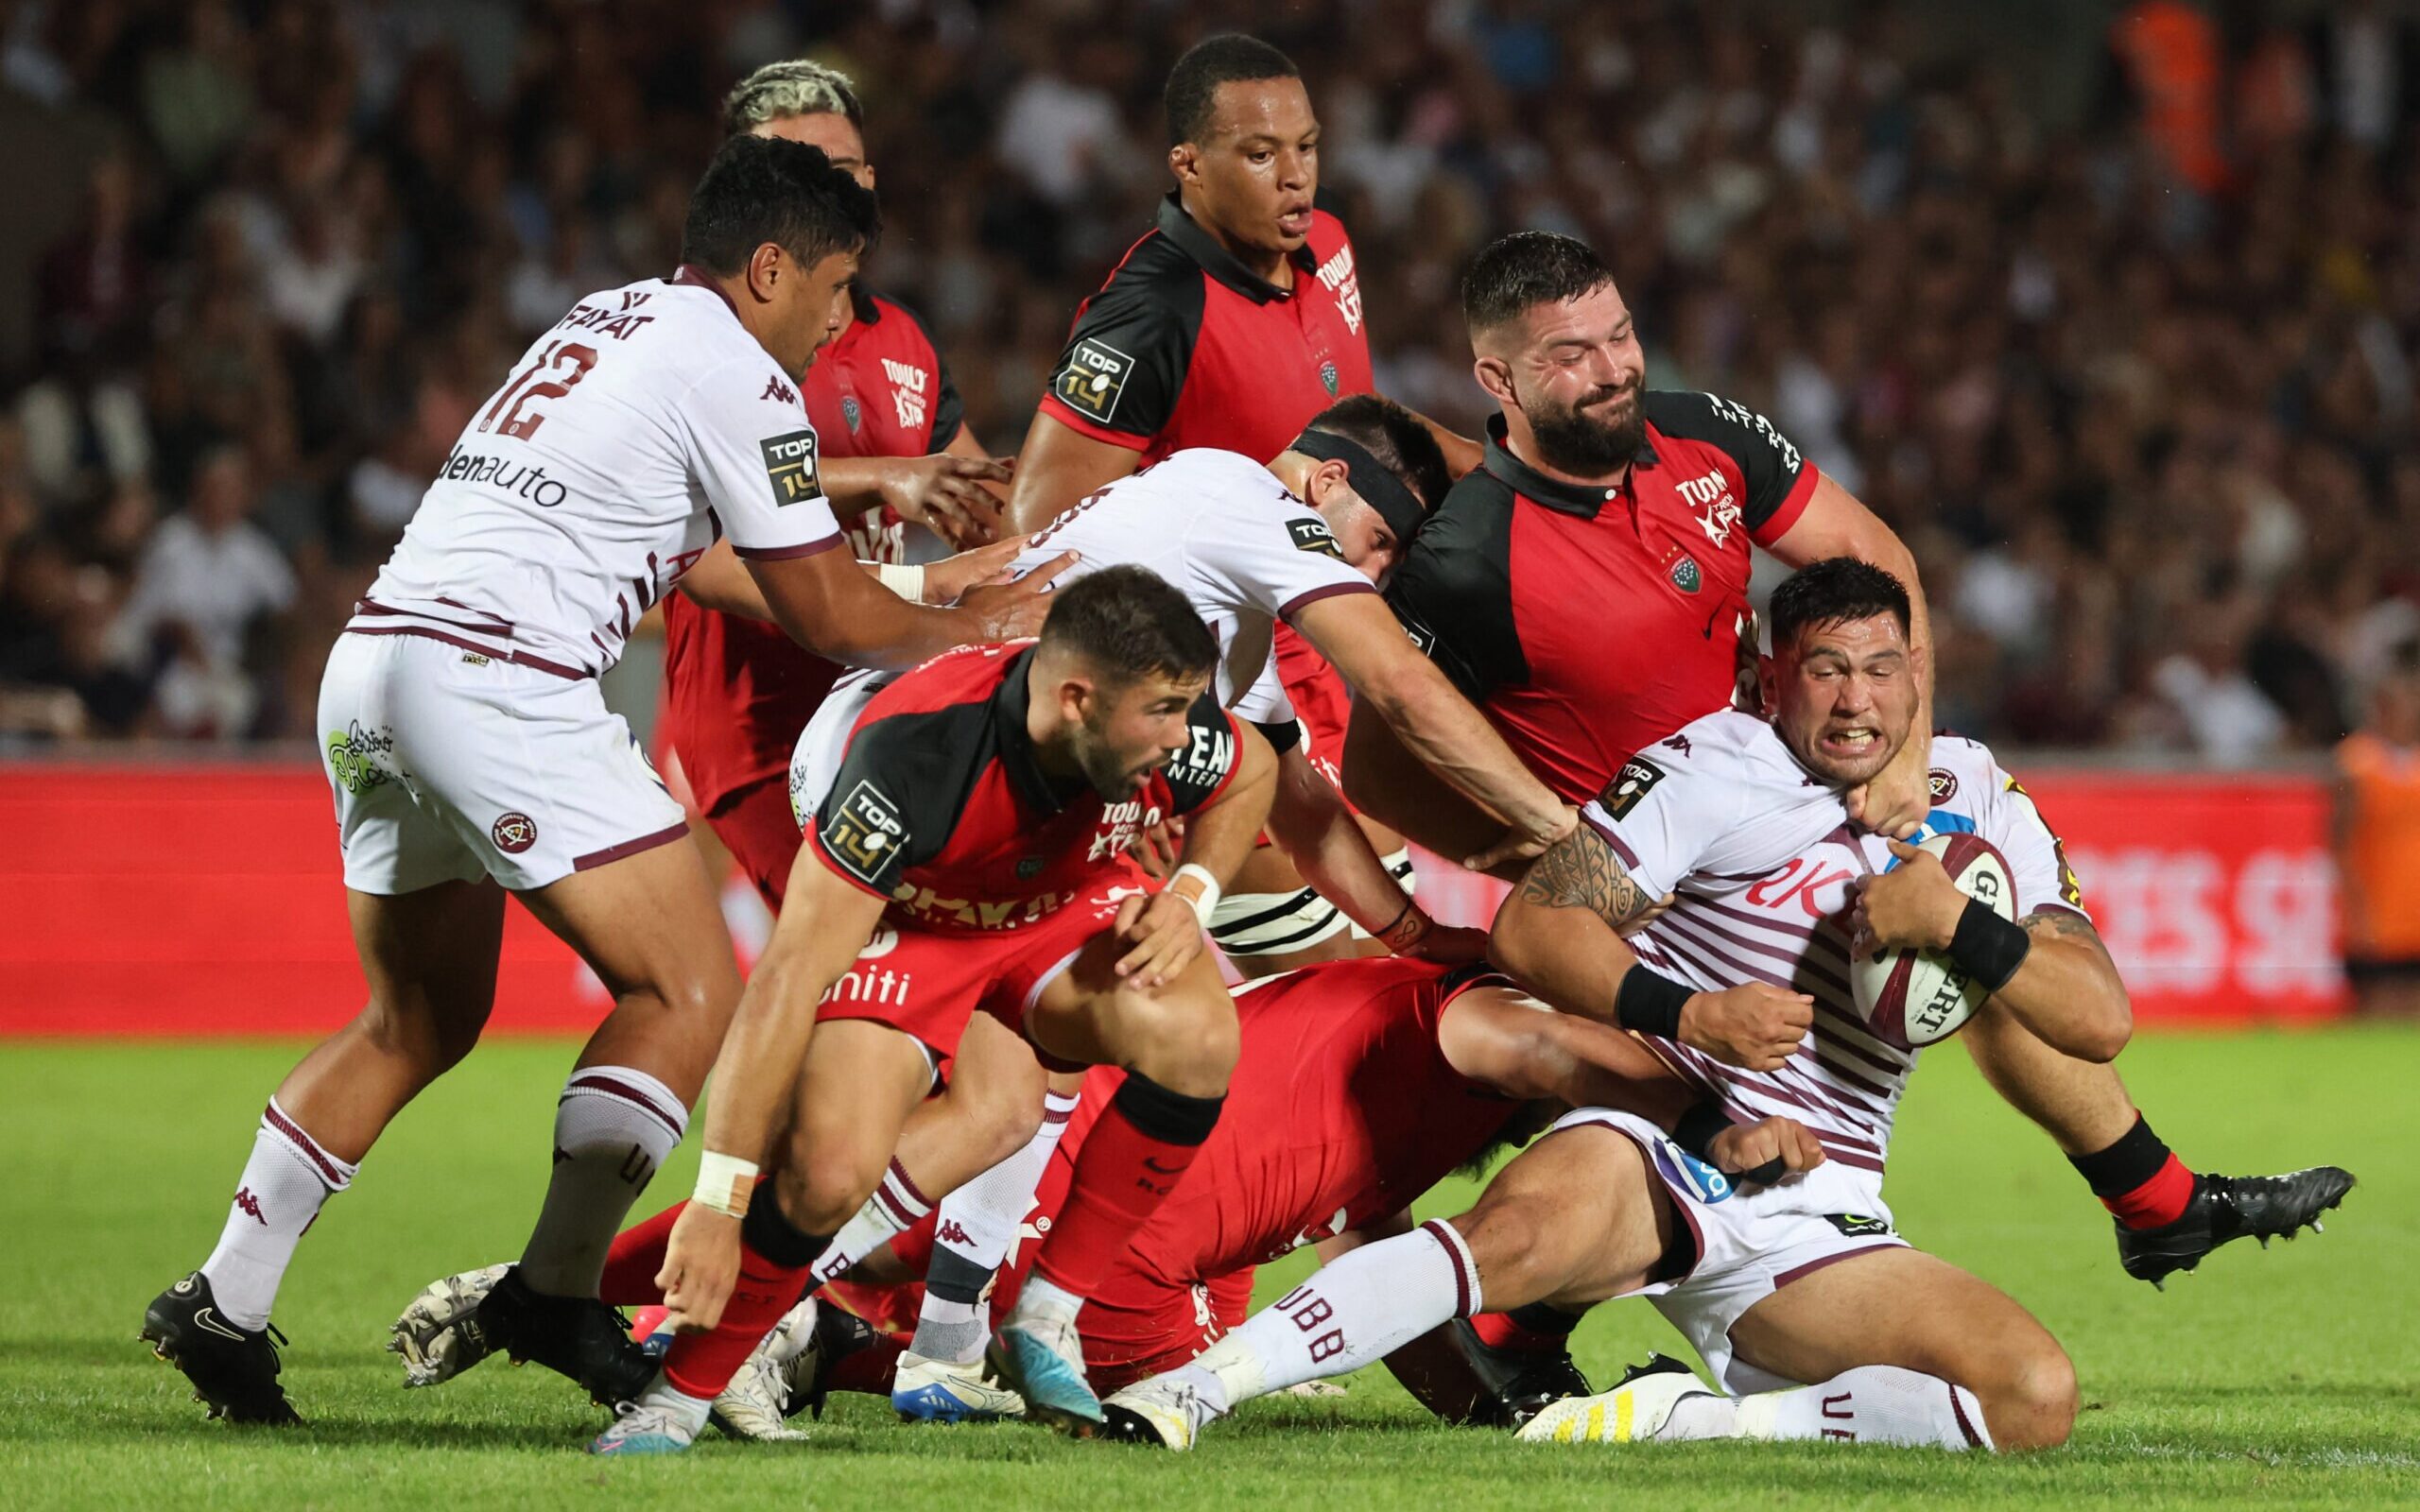 Copa Do Mundo De Rugby: Explorando O Fenômeno Global Que Une Esporte E  Cultura - Hooligan Rugby